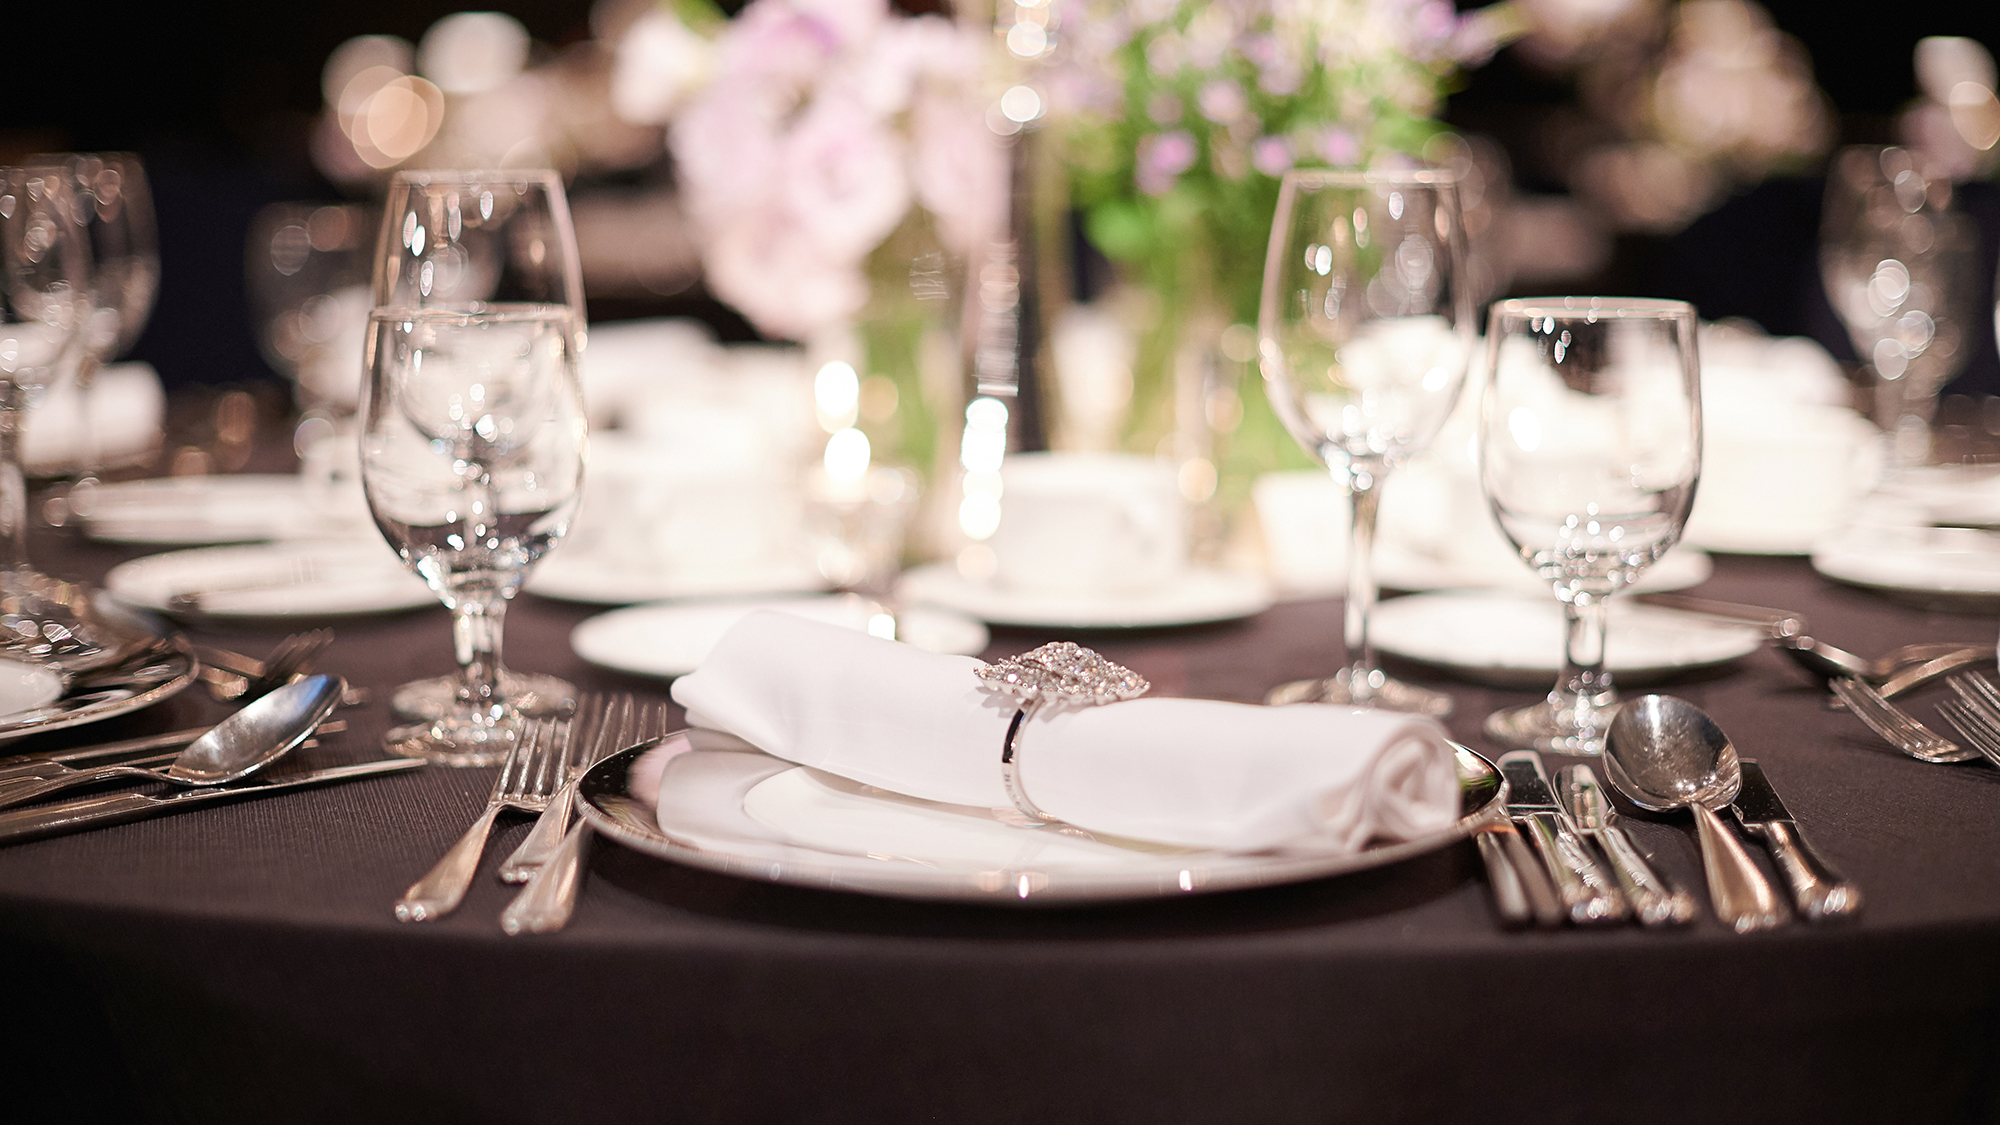 Lotte Hotel Guam - Banquets & Conventions - Wedding Photos